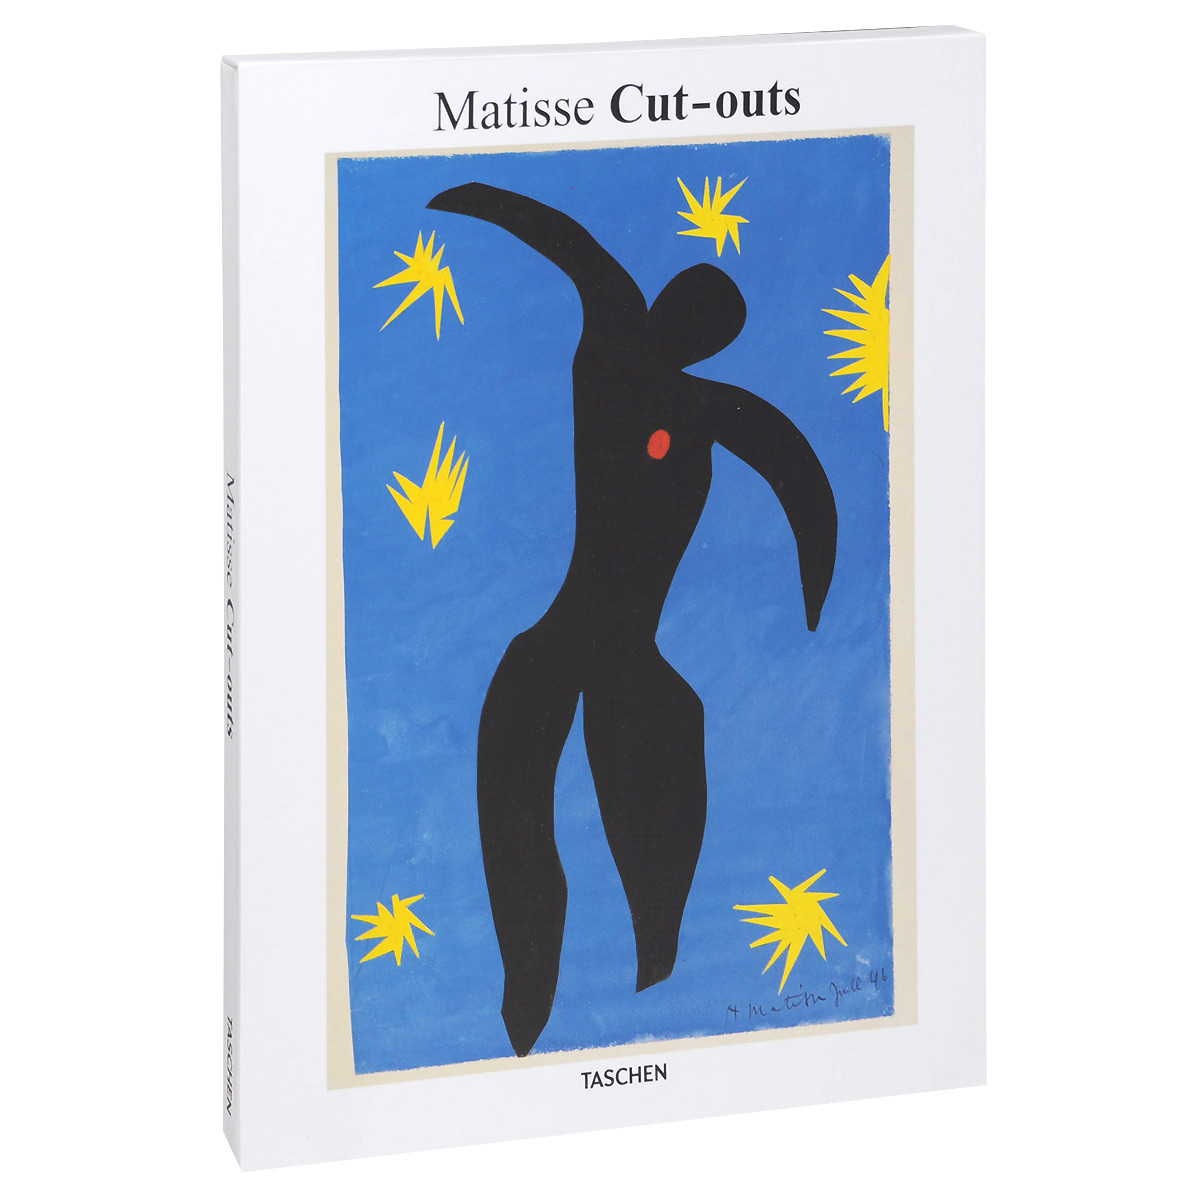 Matisse Print Set: 16 prints packaged in a cardboard box